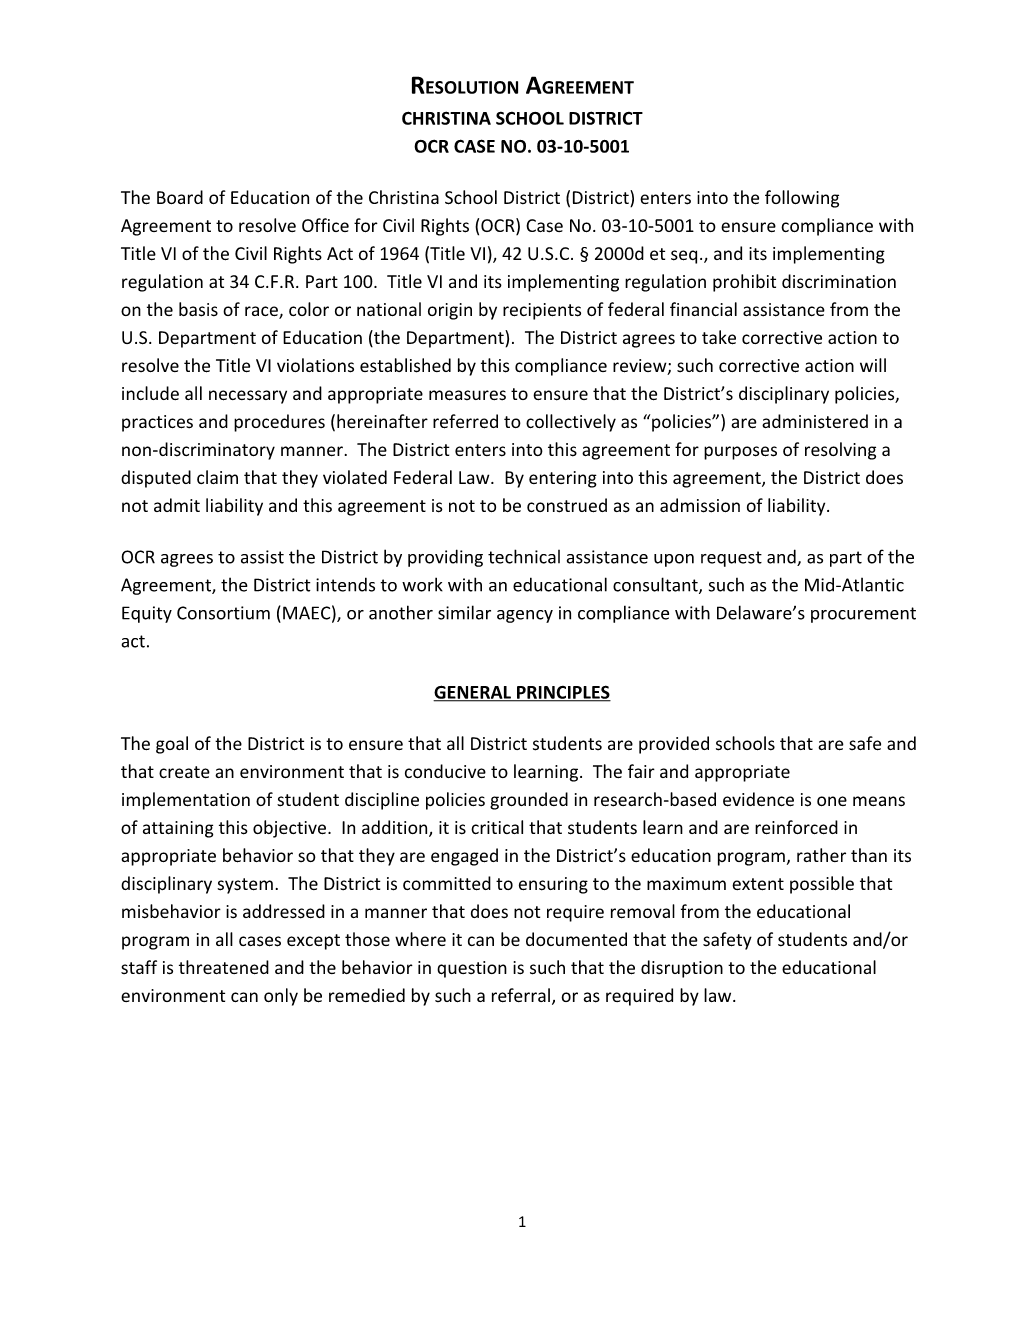 Resolution Agreement Christina School District: OCR Case No. 03-10-5001 December 2012 (MS Word)